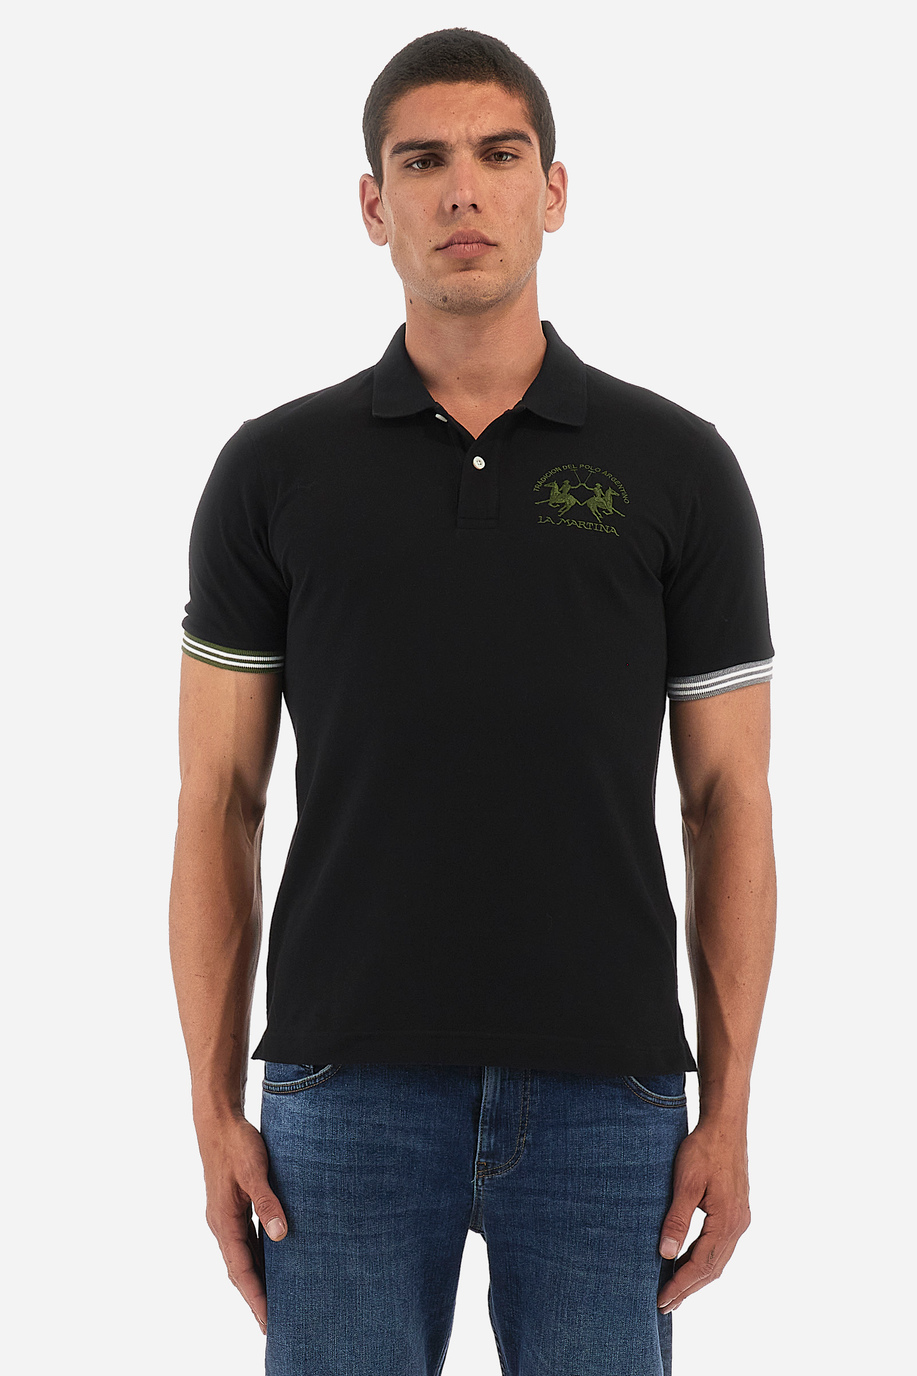 Men's polo shirt in a regular fit - Waddell - Short Sleeve | La Martina - Official Online Shop